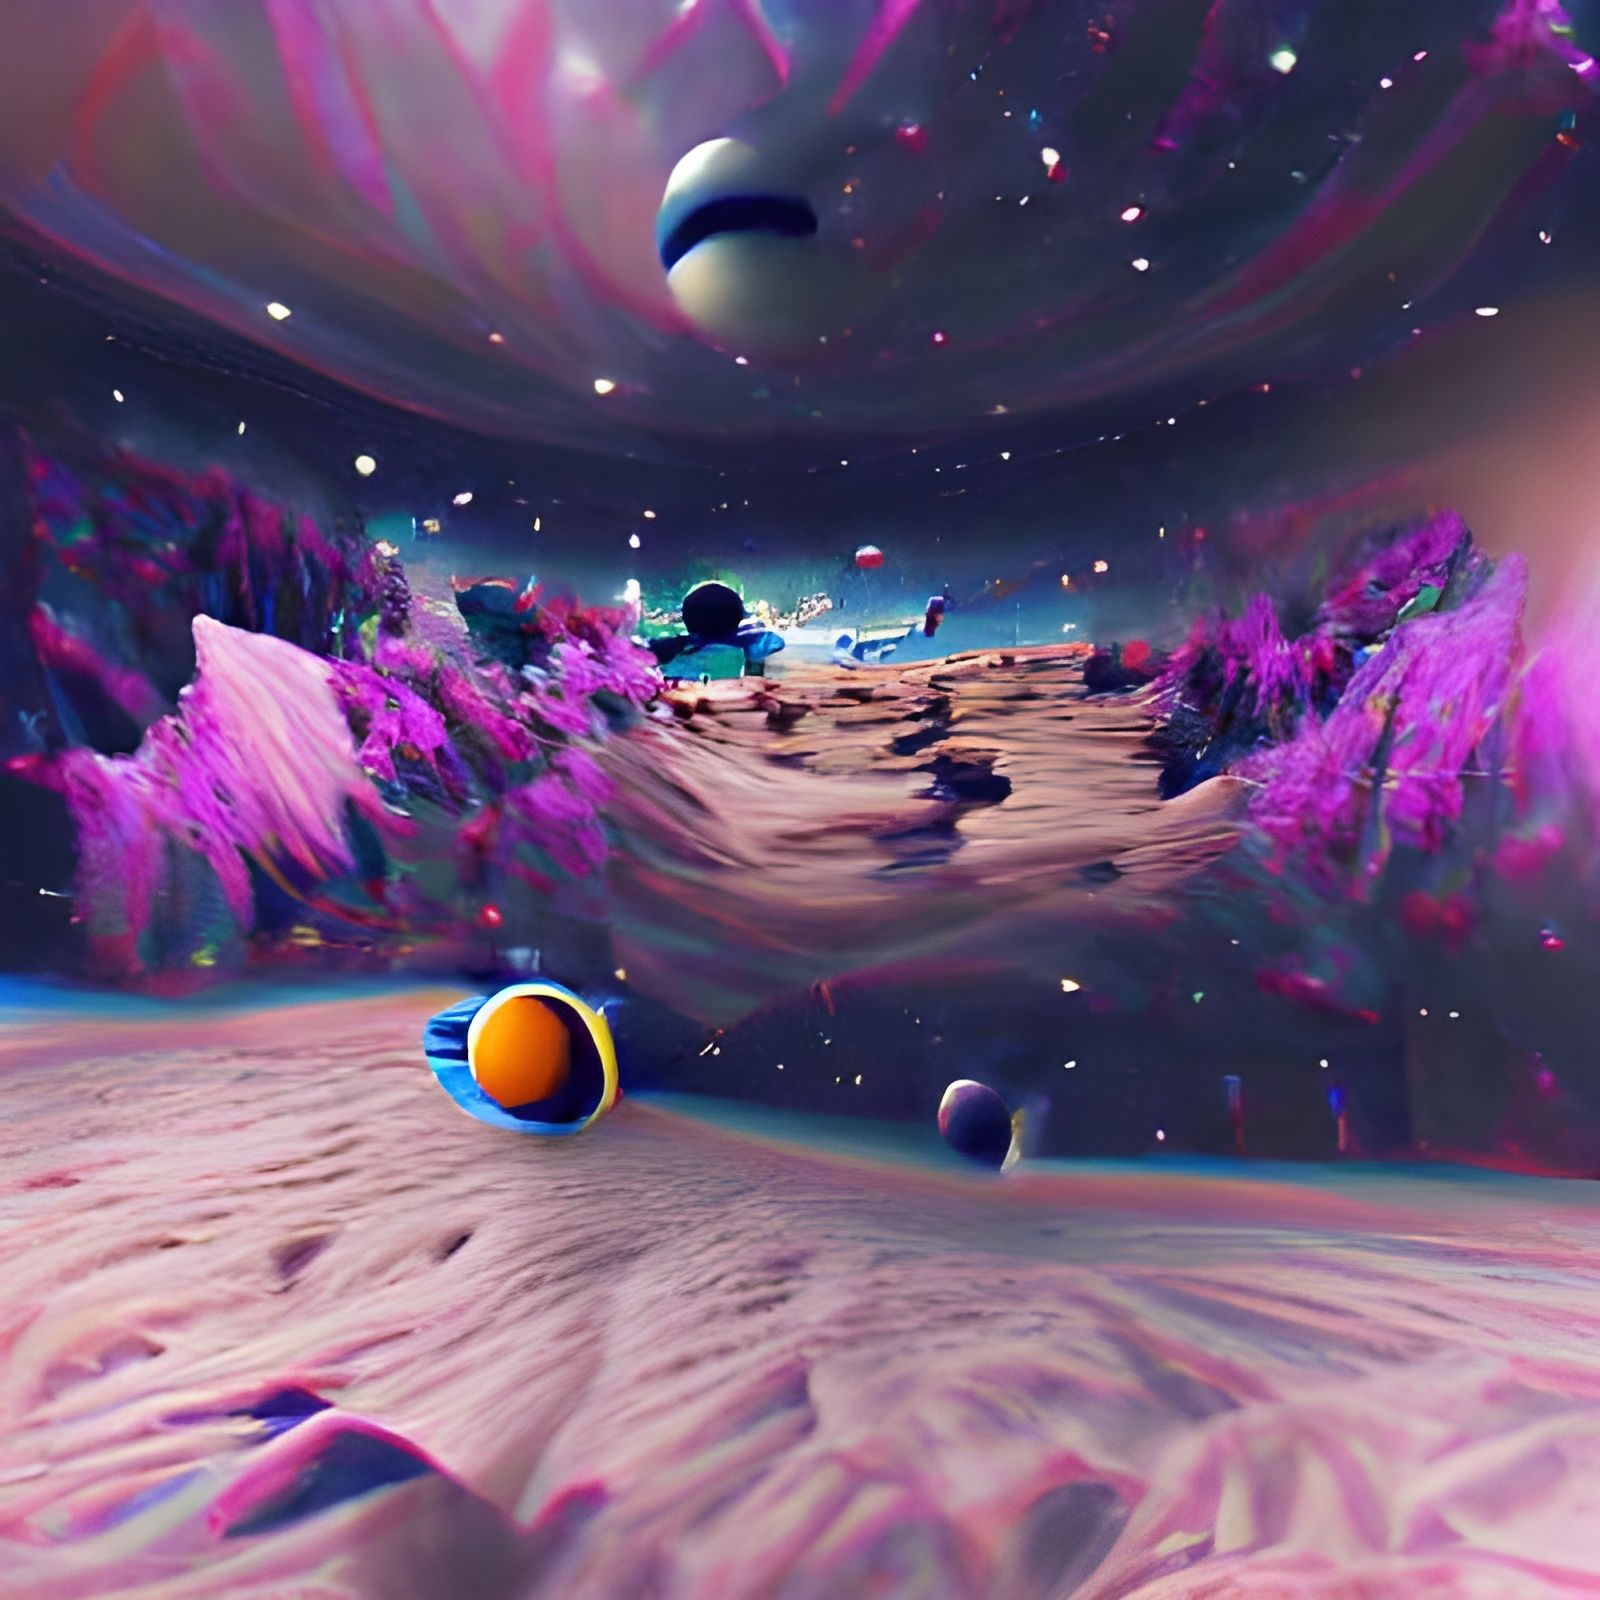 Space behind planet